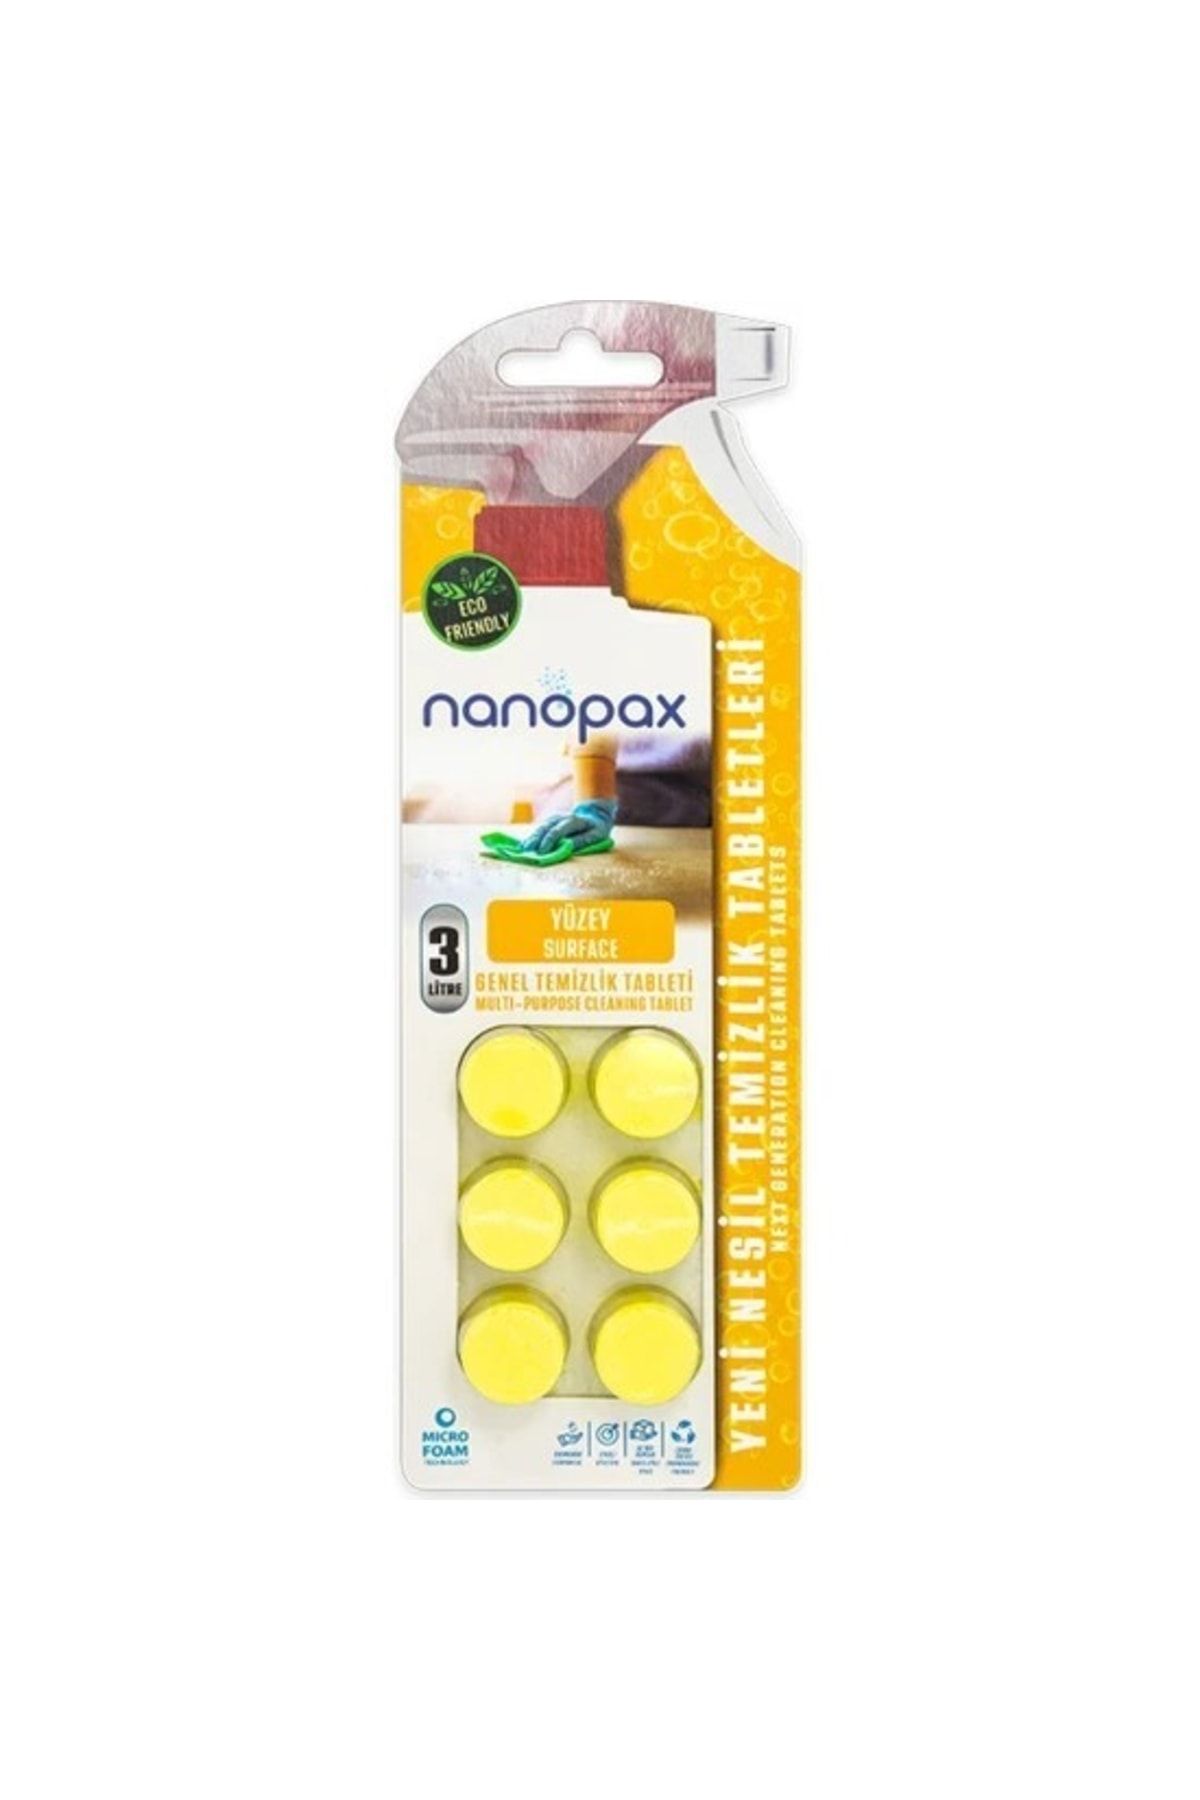 Miniso Nanopax Yüzey Temizlik Tableti 6 Tablet 3 L